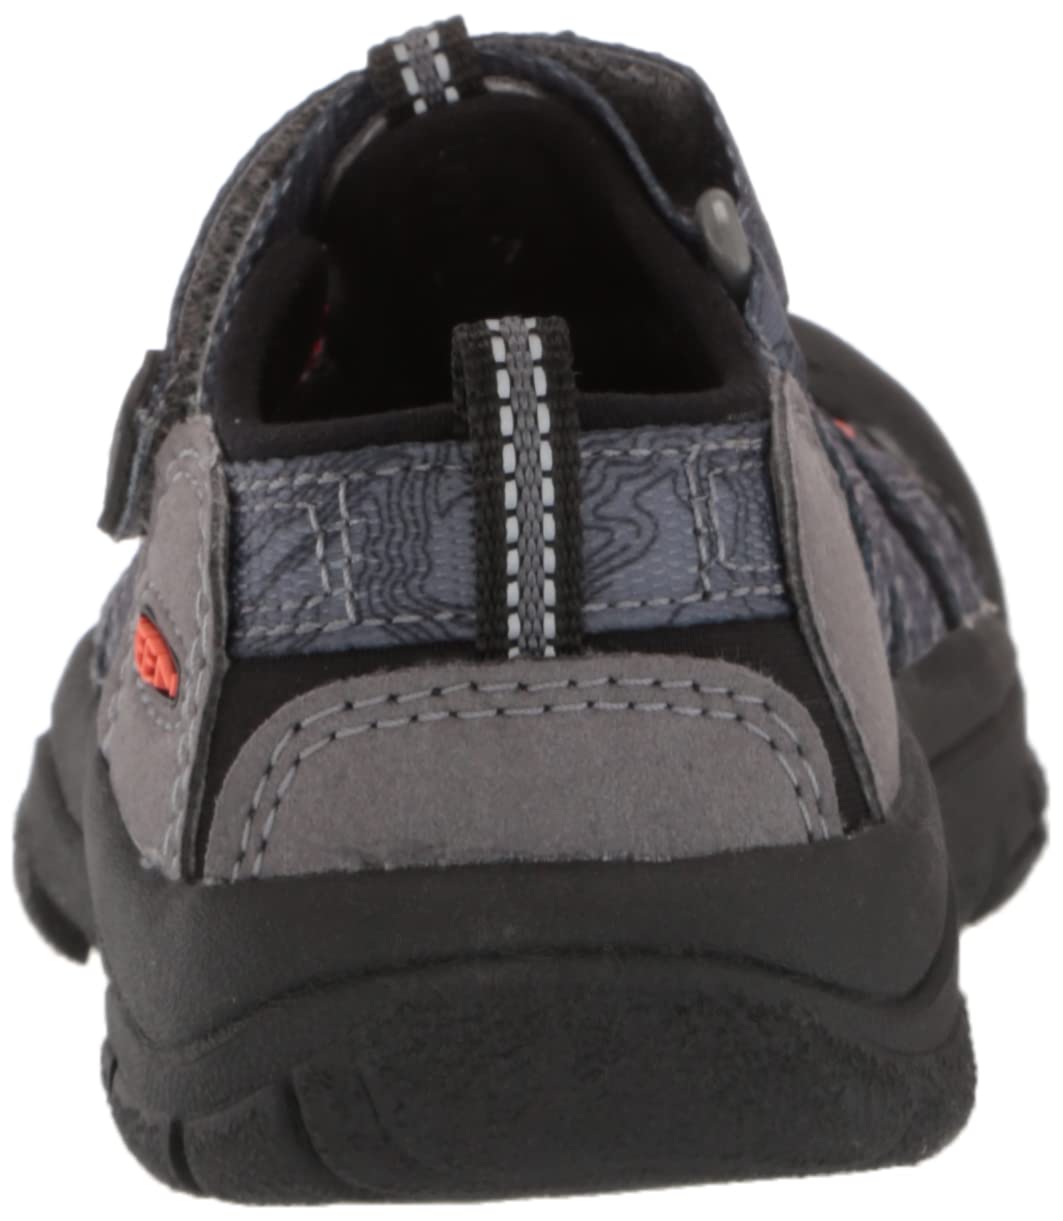 KEEN Unisex-Child Newport H2 Closed Toe Water Sandals, Steel Grey/Black, 5 Big Kid US